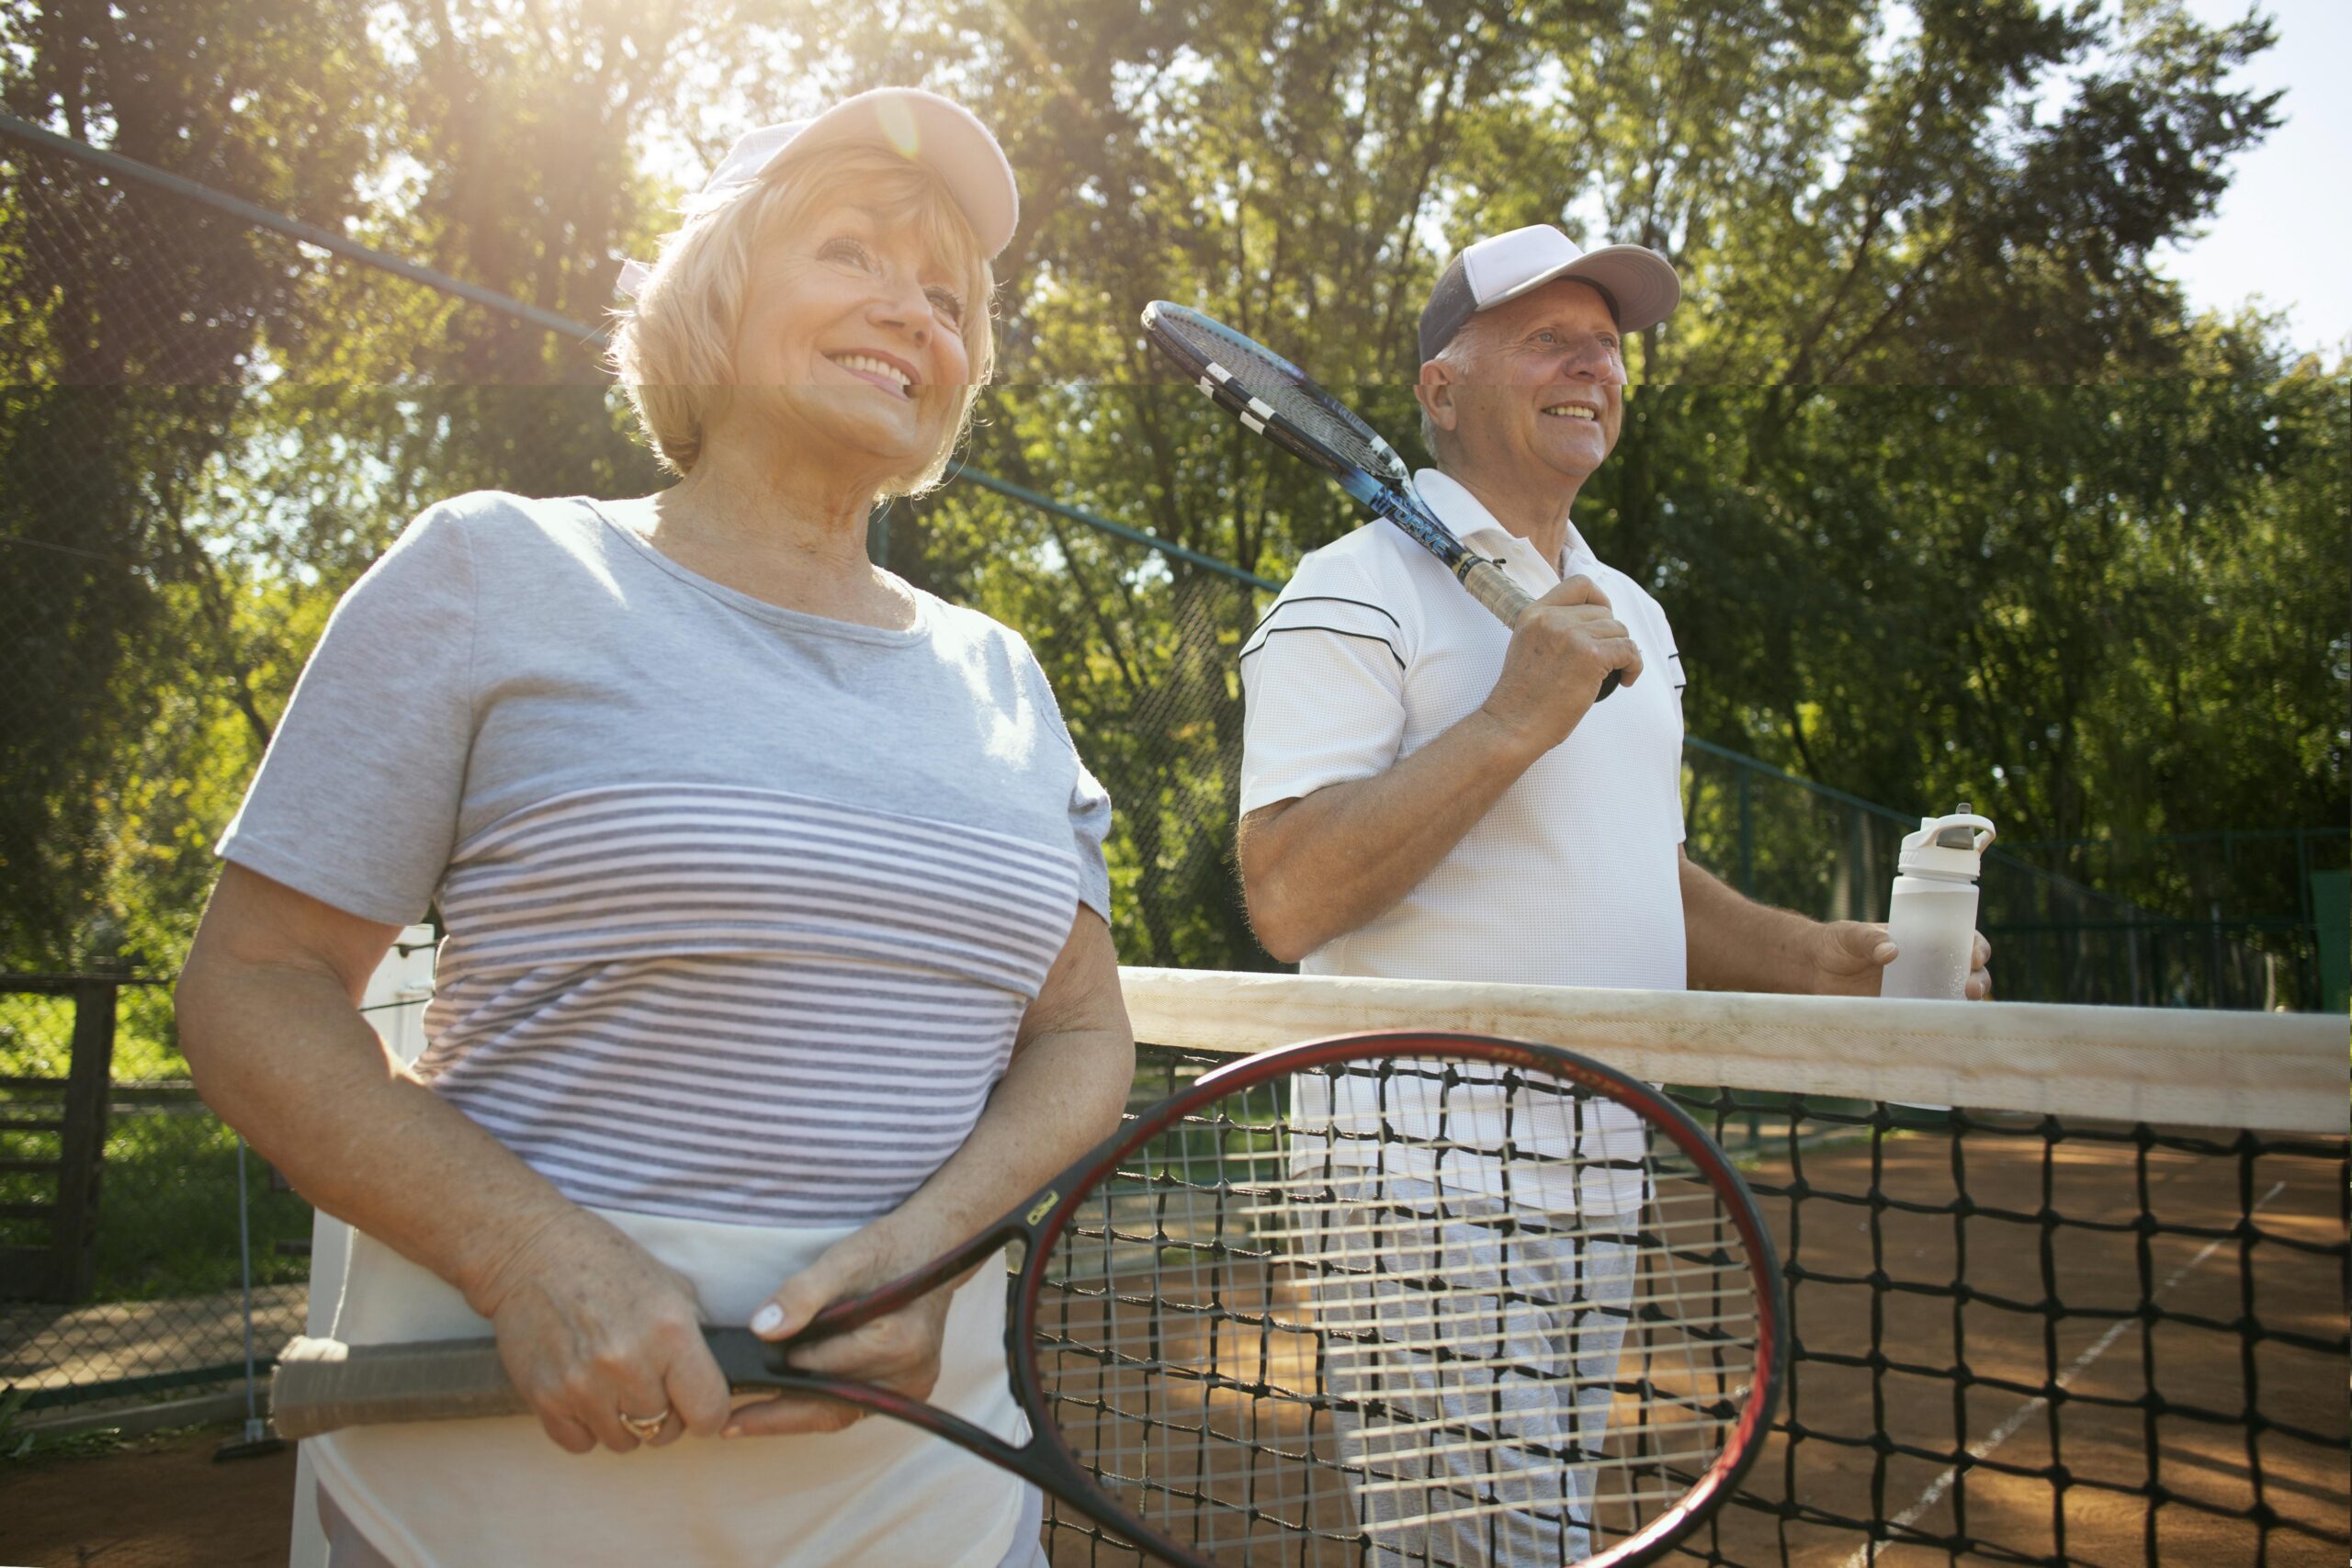 Older people with regular activity routines feel happier